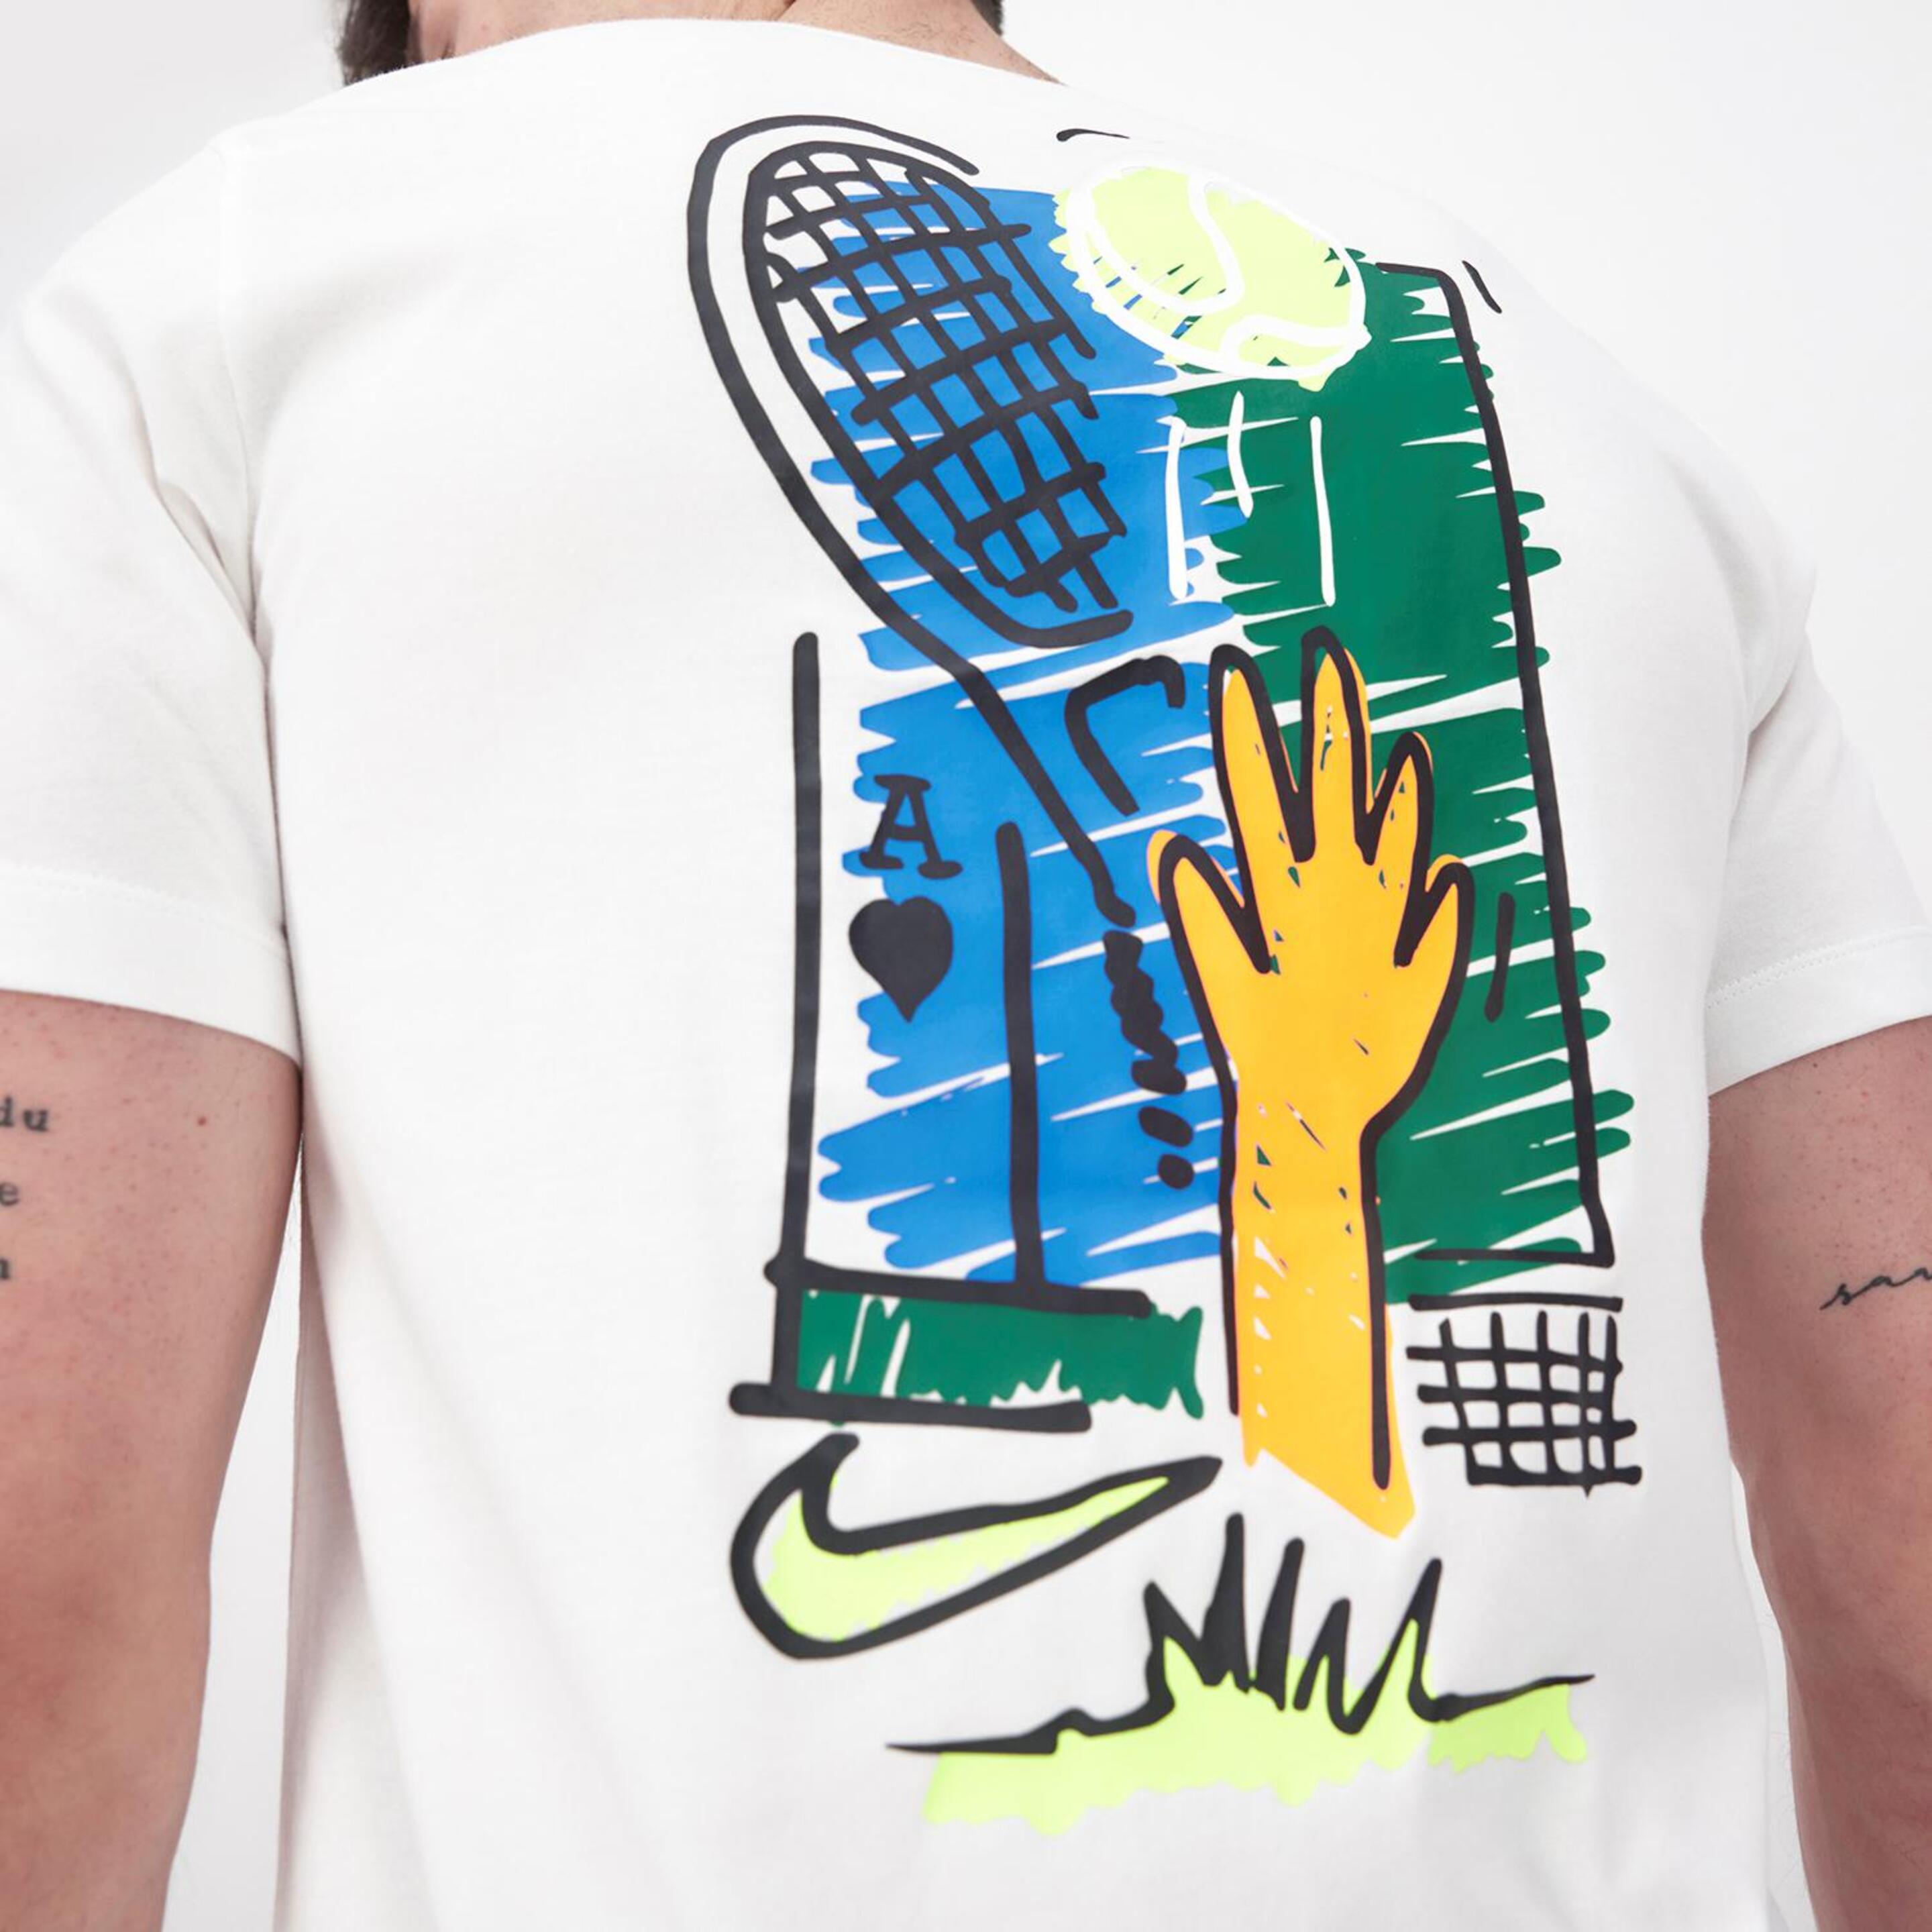 Nike Open - Blanco - Camiseta Tenis Hombre  | Sprinter